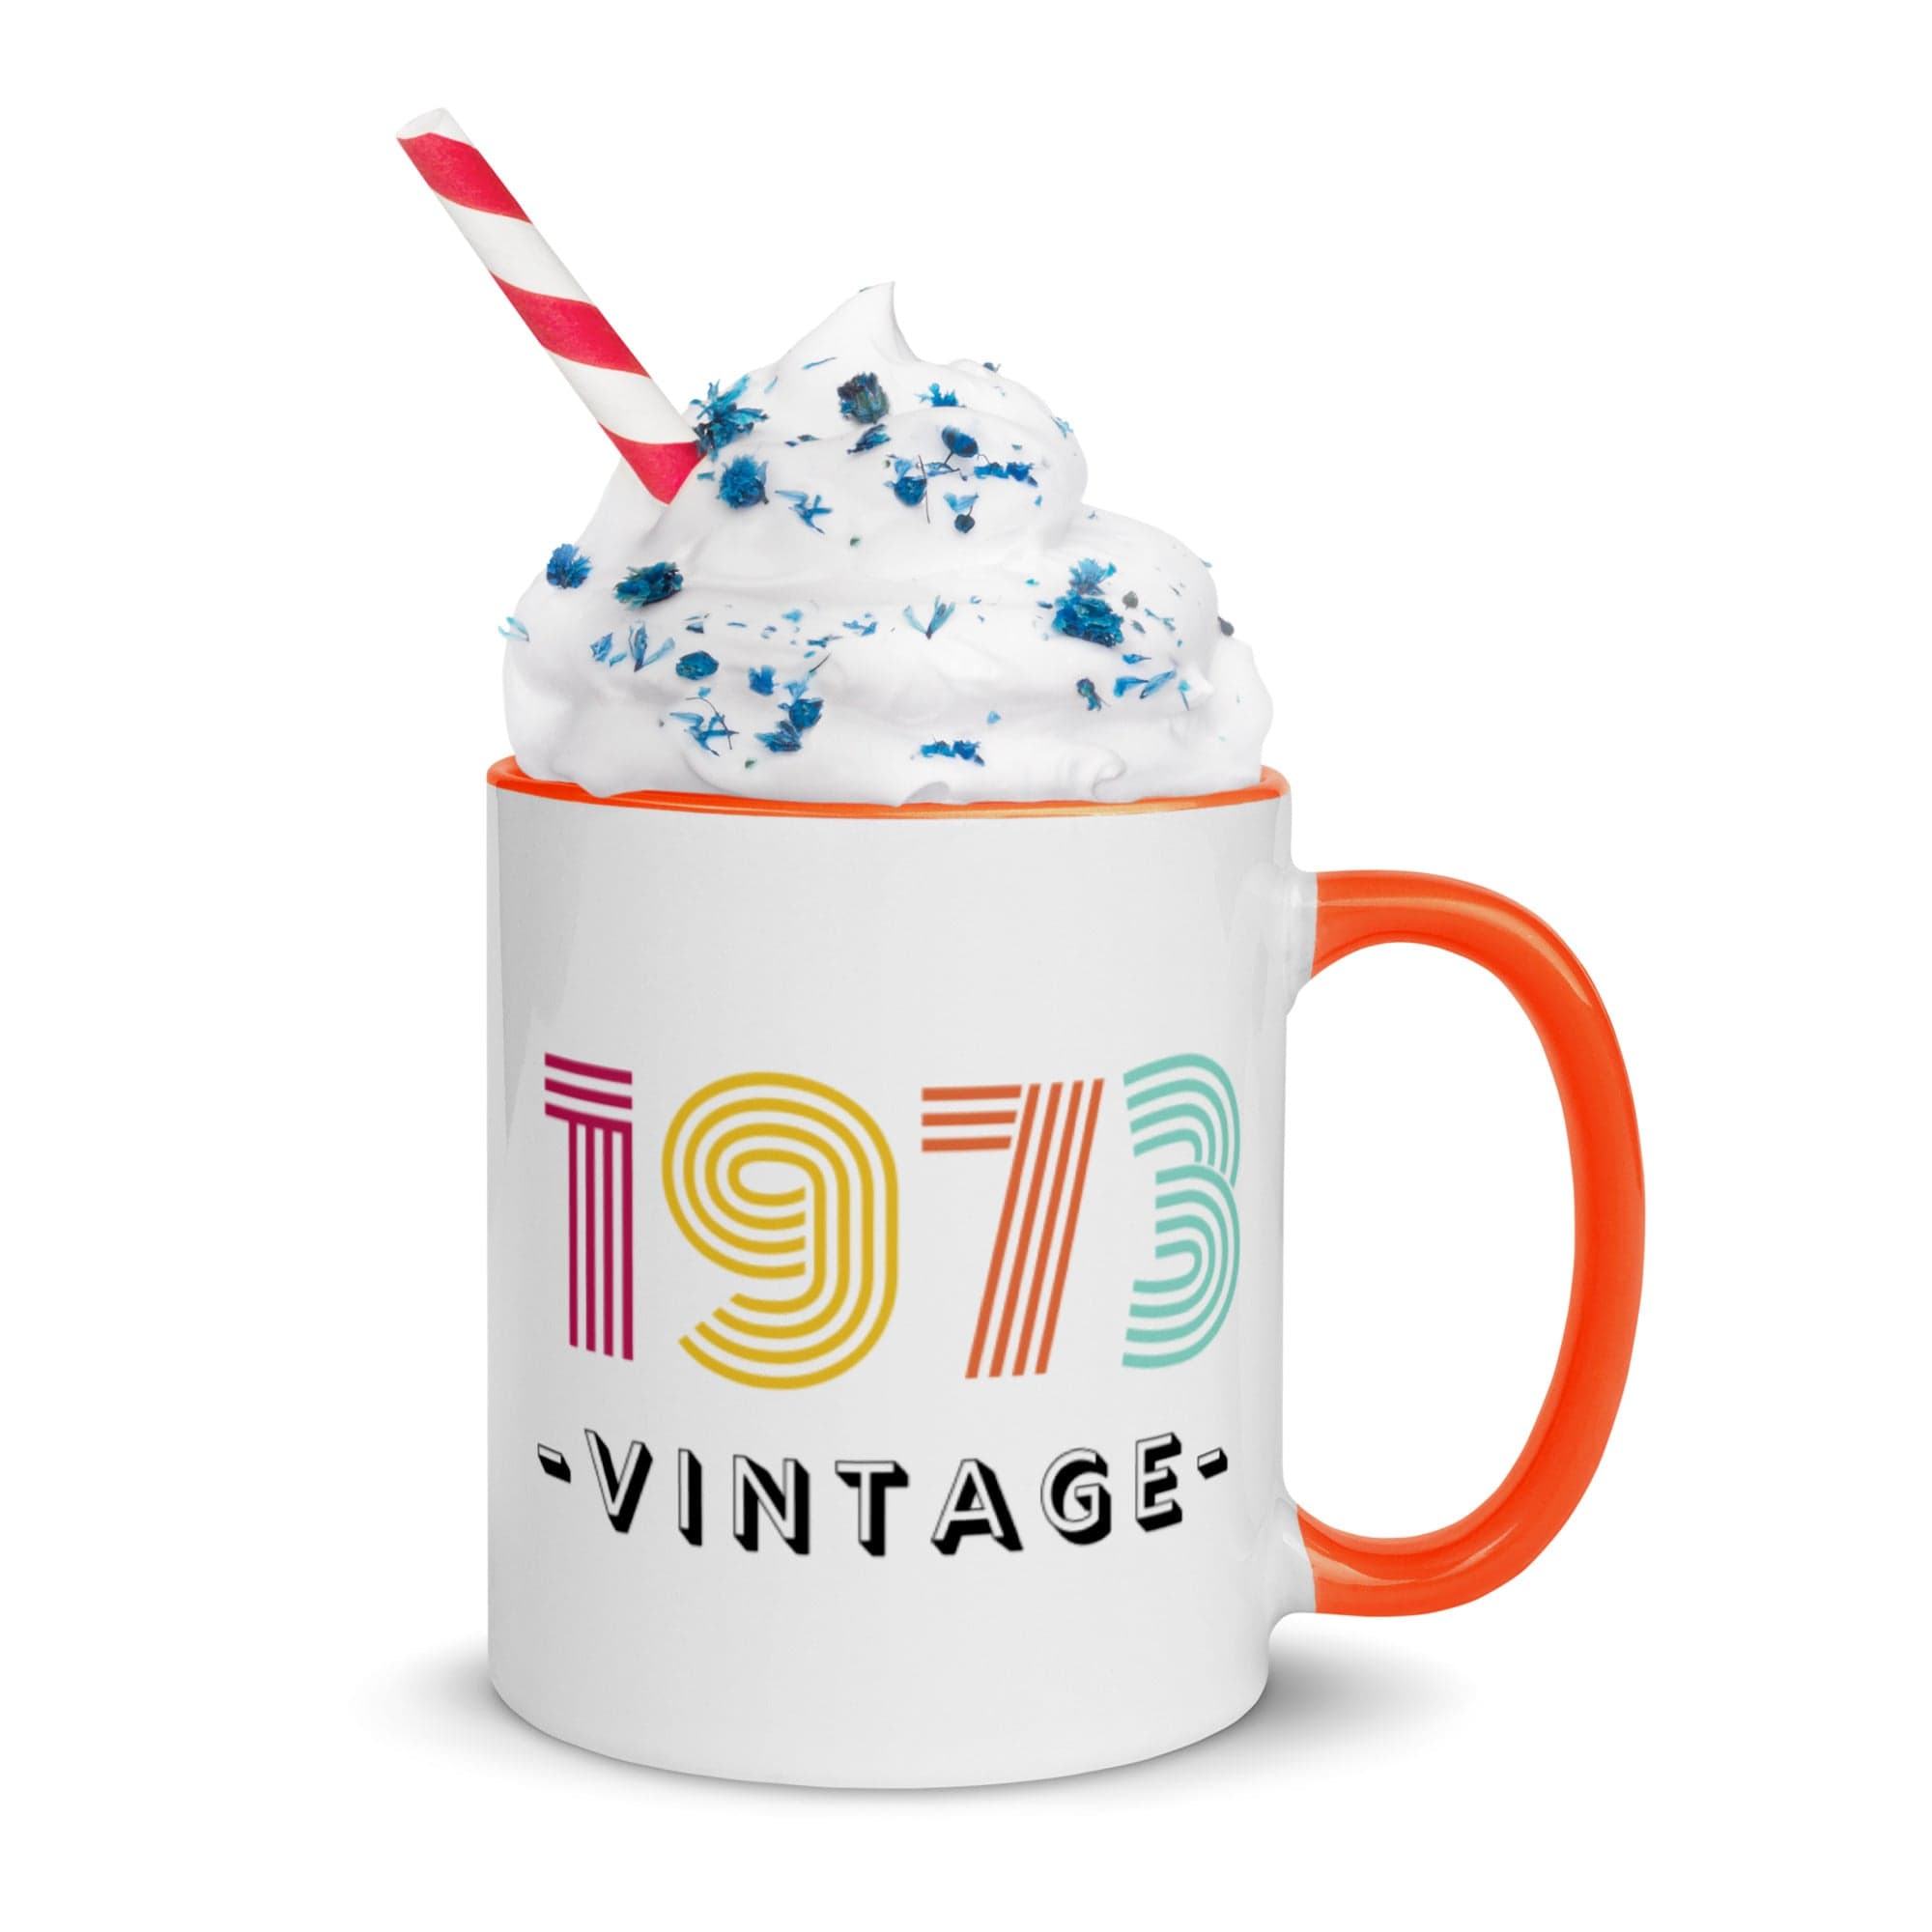 Spruced Roost Orange 1973 Vintage! 50th Birthday Mug with Color Inside